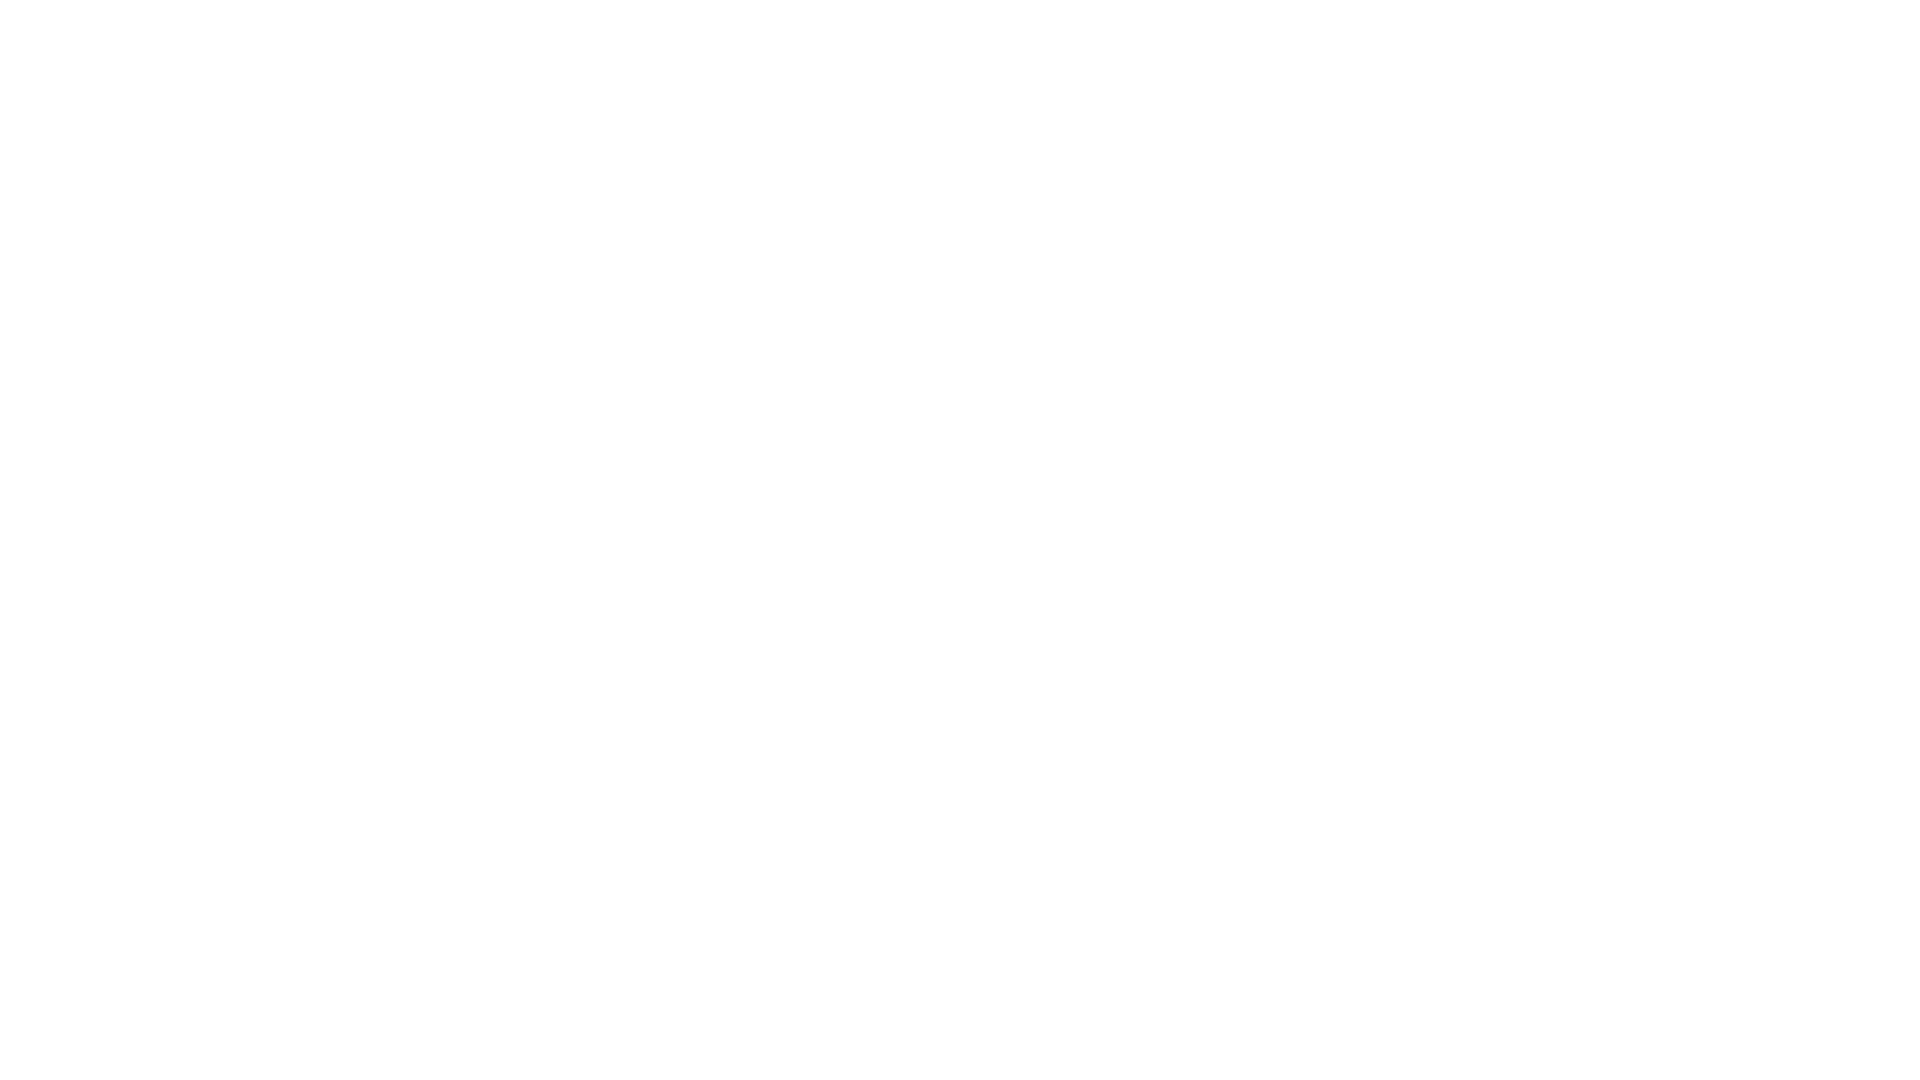 (c) Premiumcartransfers.com